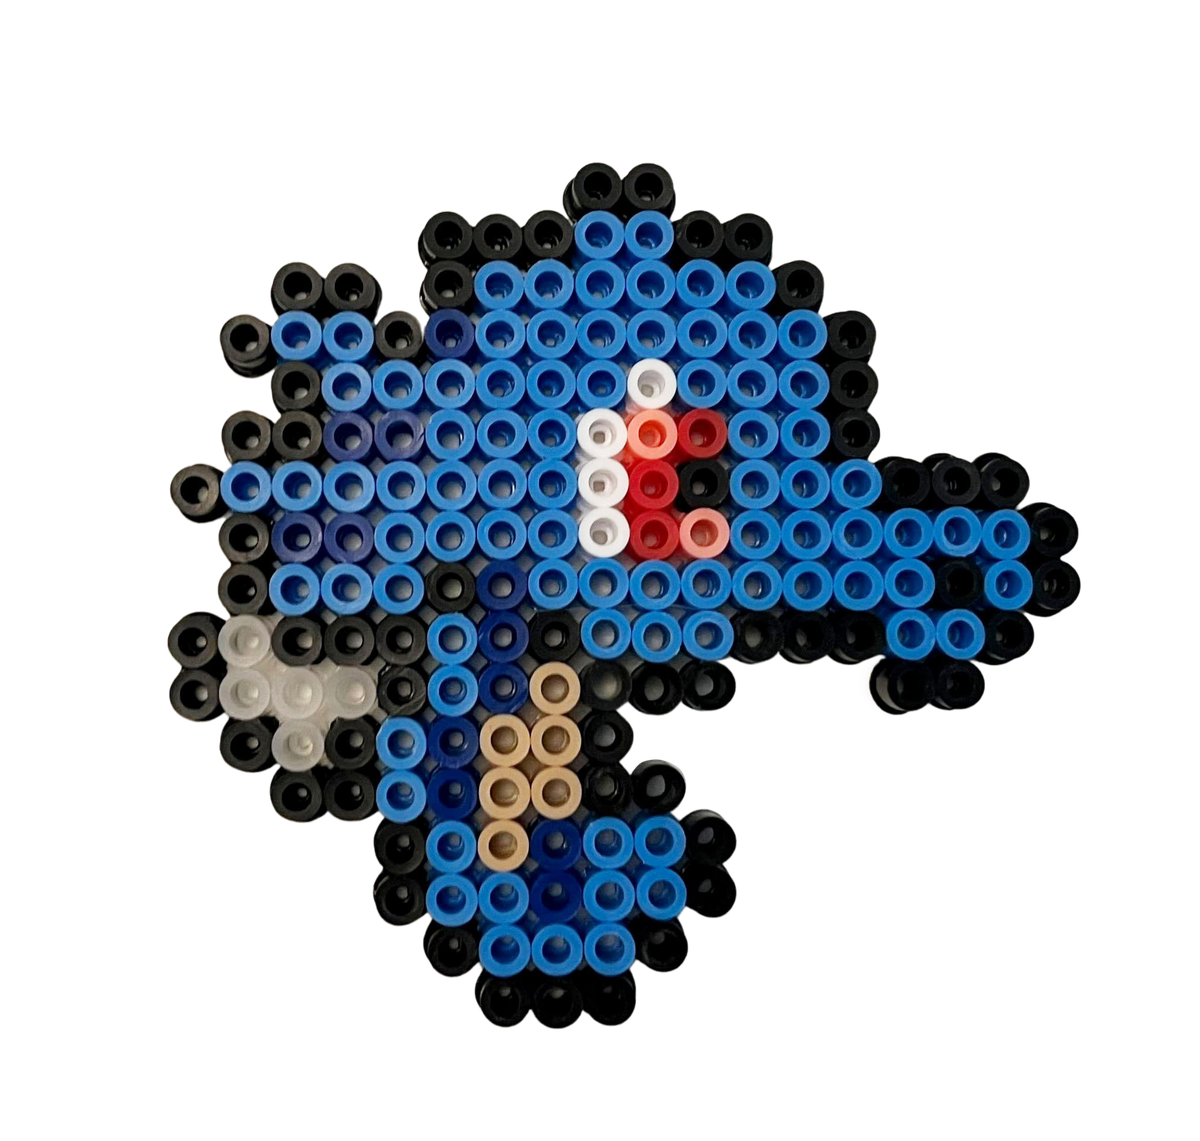 Pokémon Perler bead creations are my go-to crafts